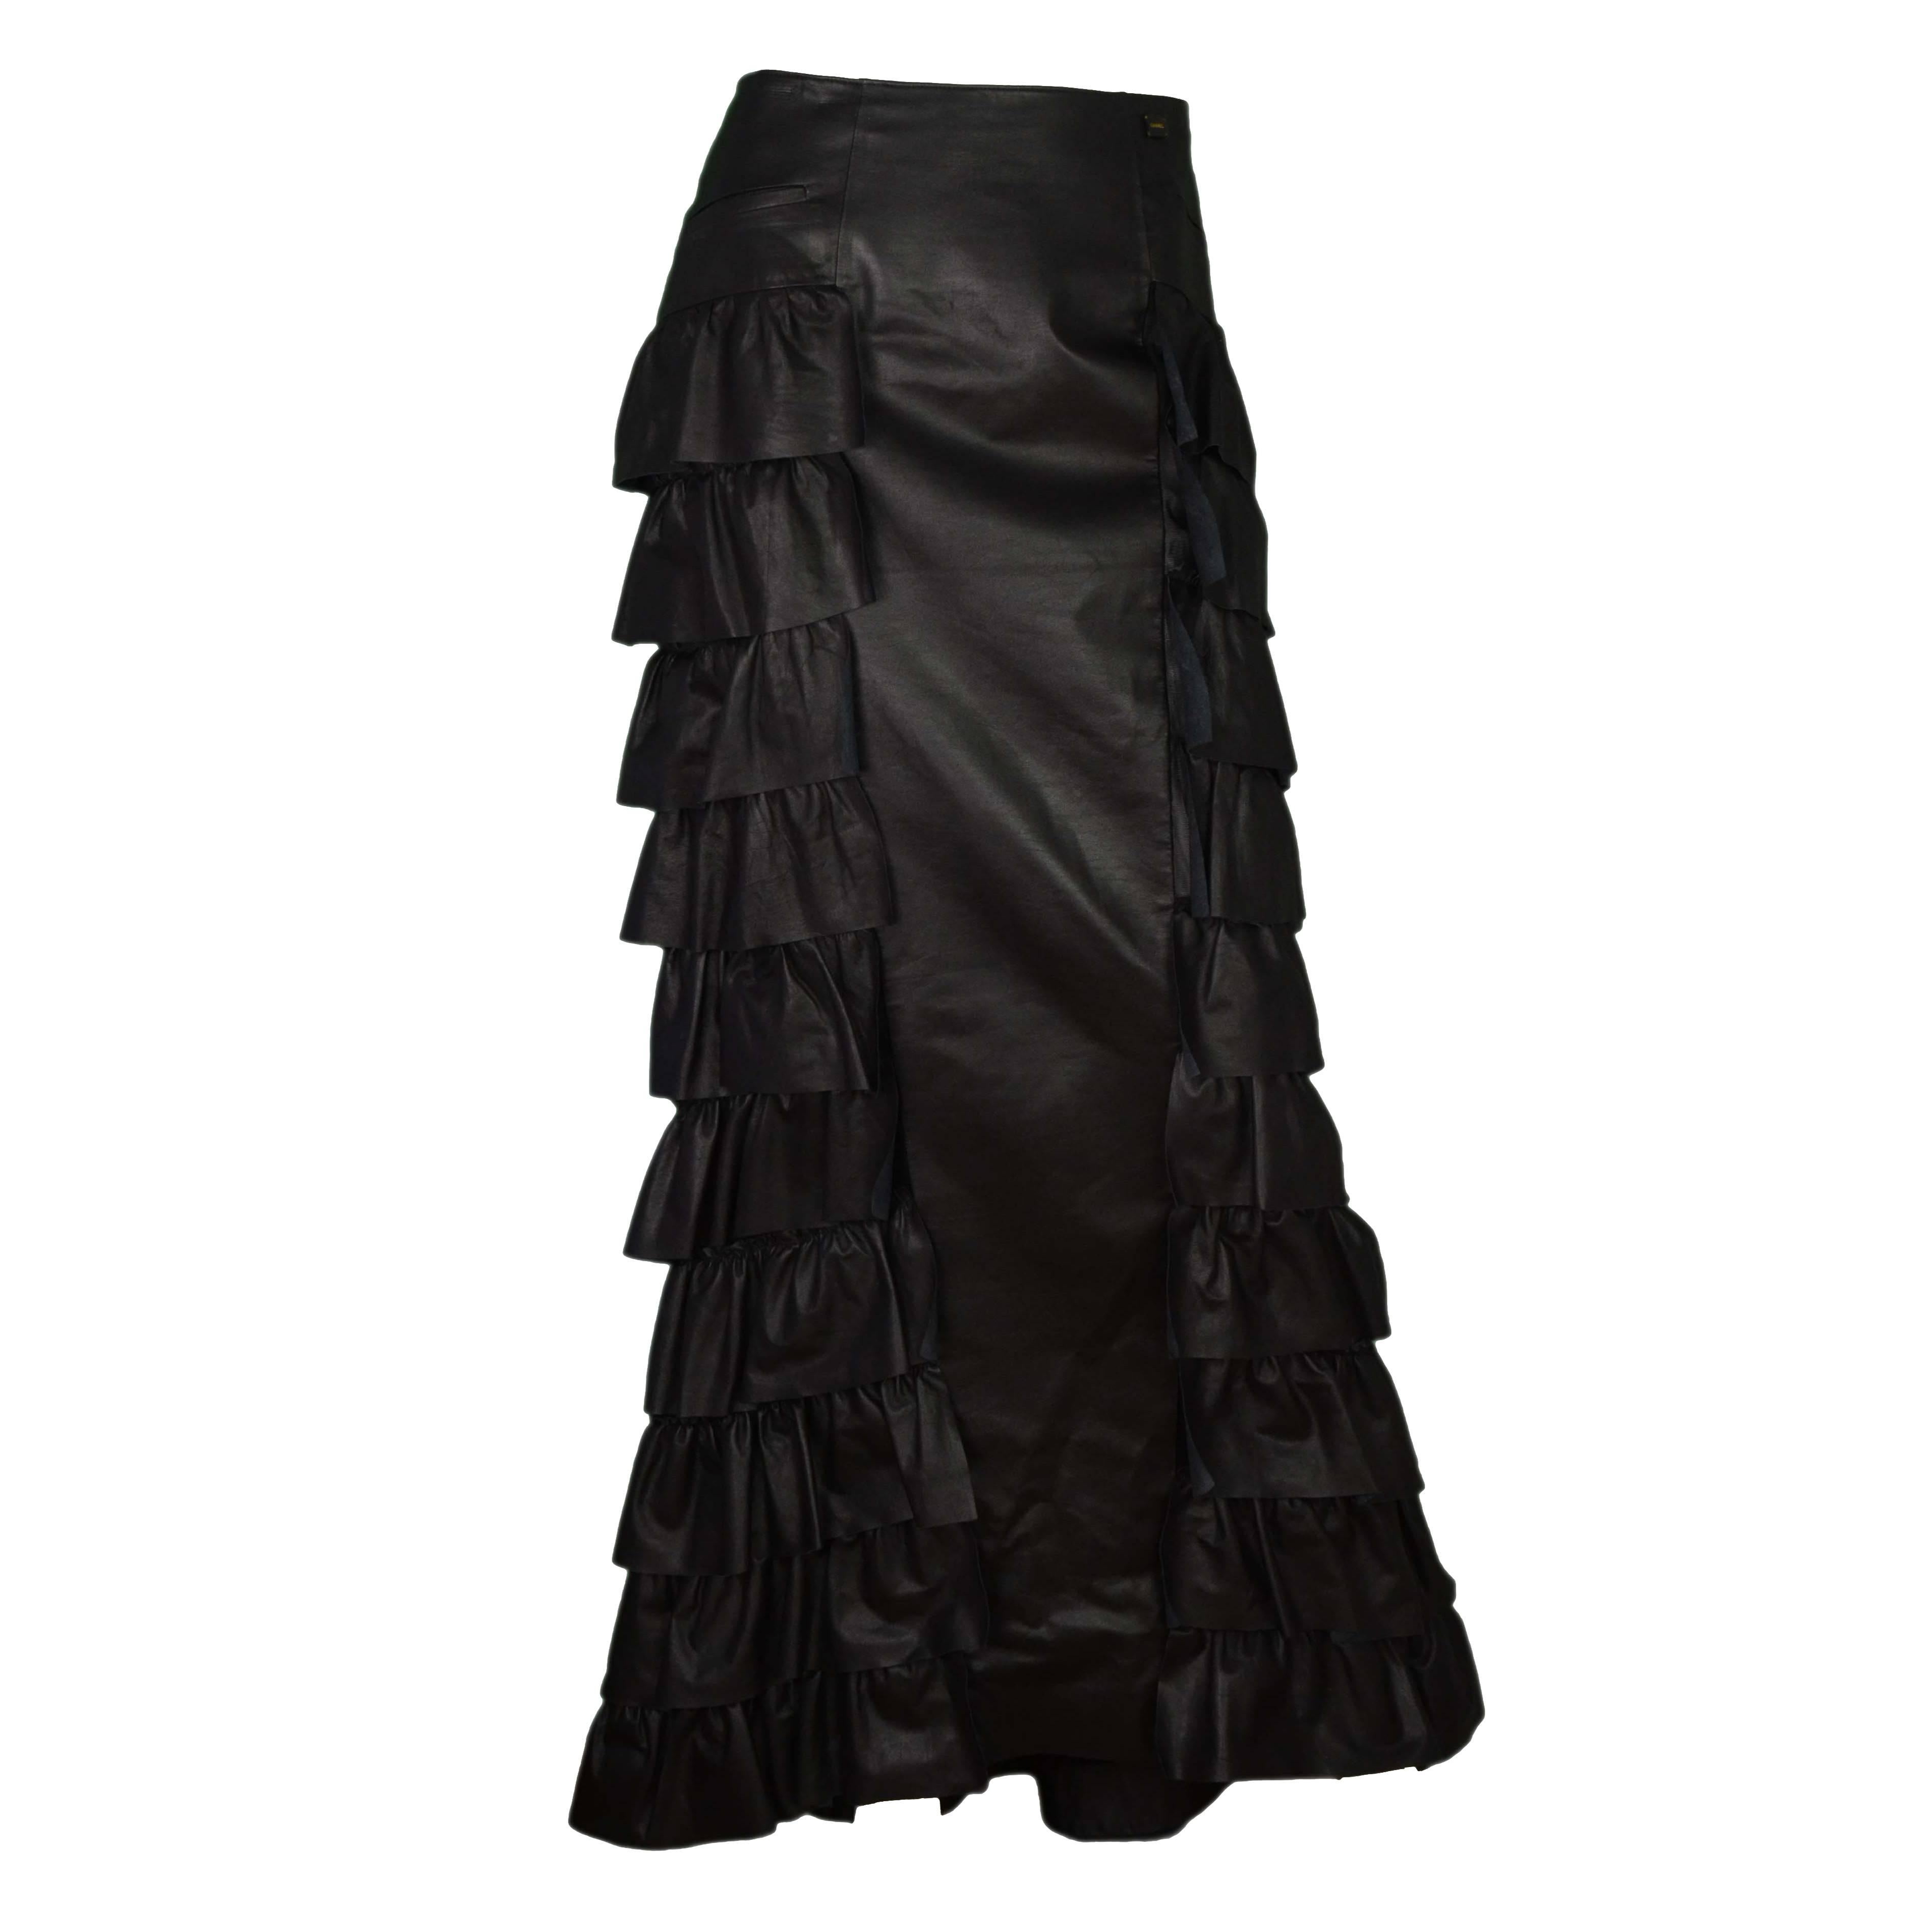 Chanel Black Leather Ruffle Floor Length Skirt sz 42